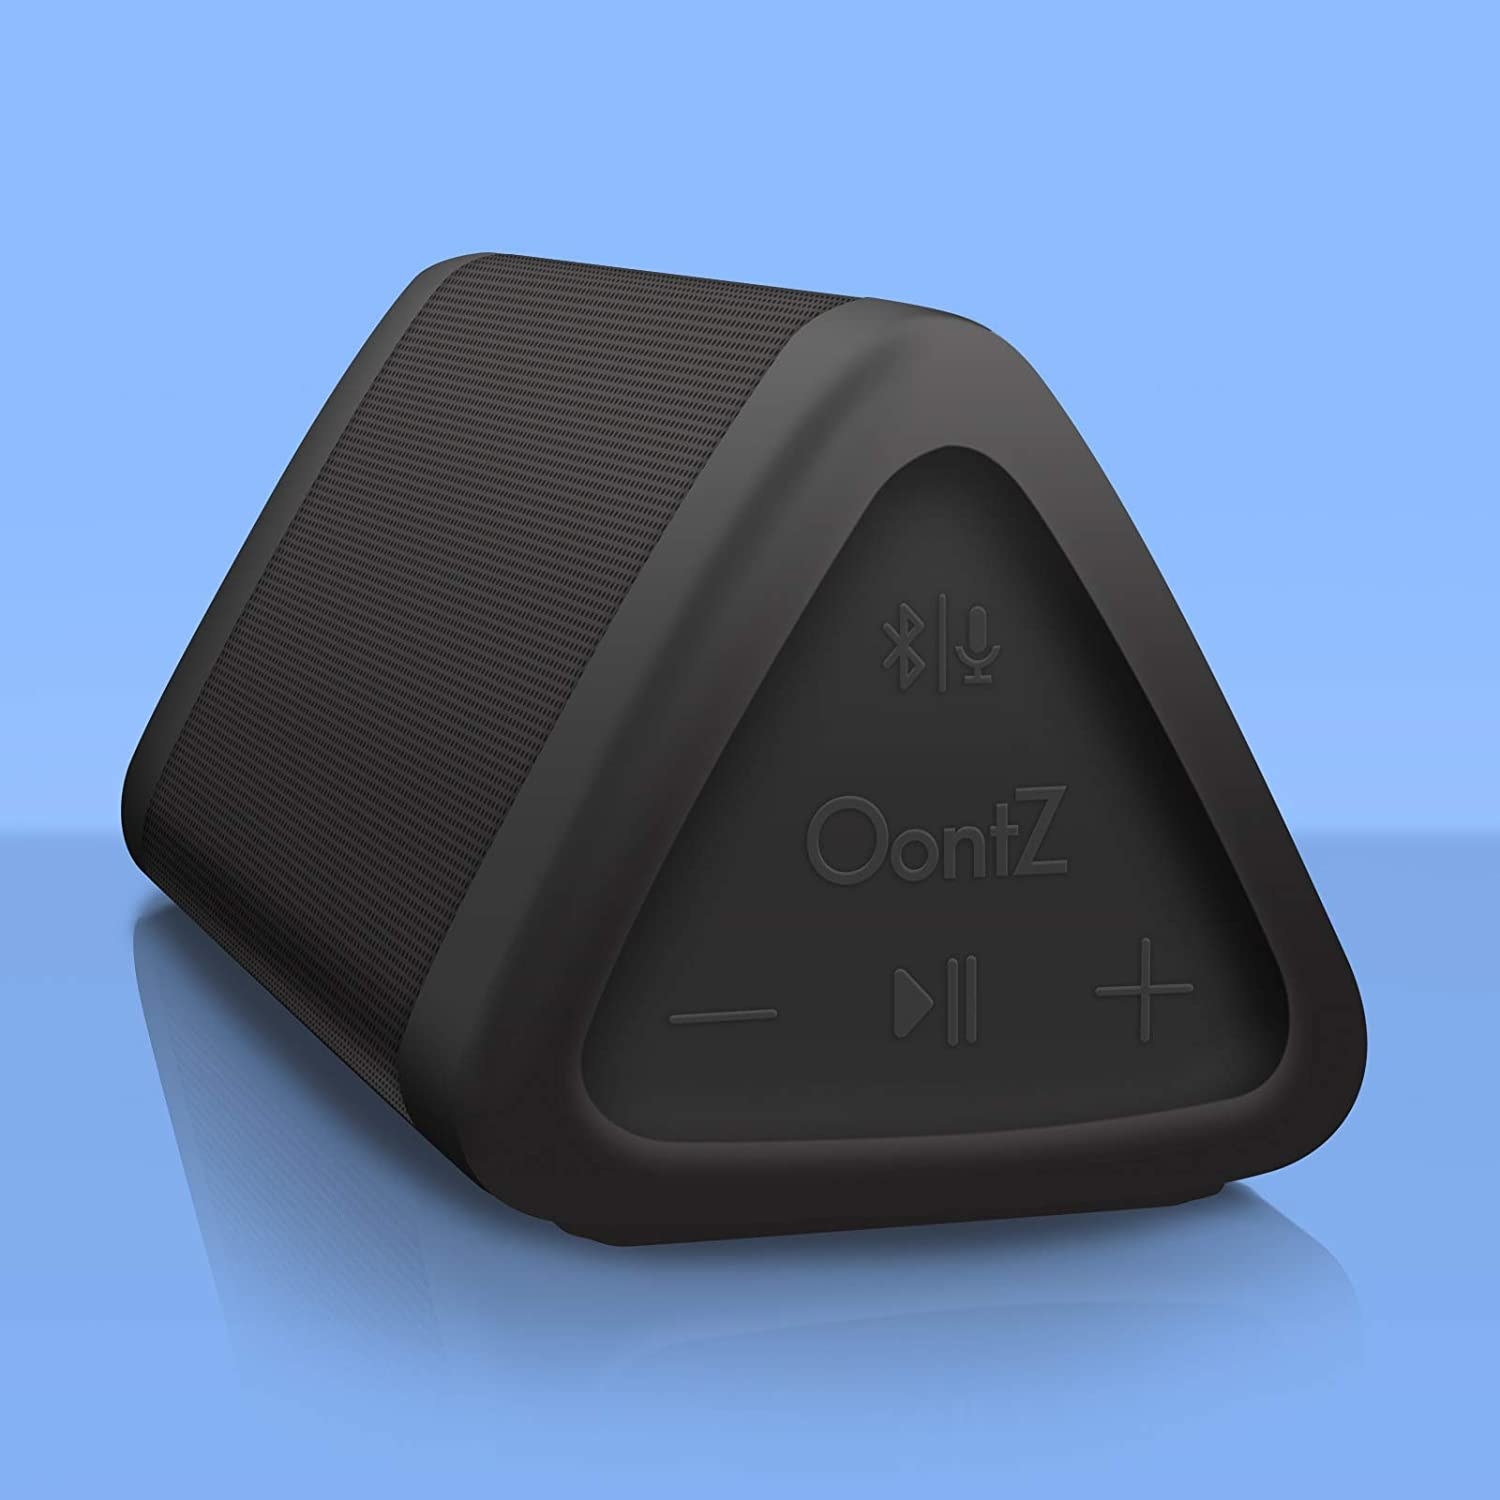 A black triangle-shaped Bluetooth speaker 